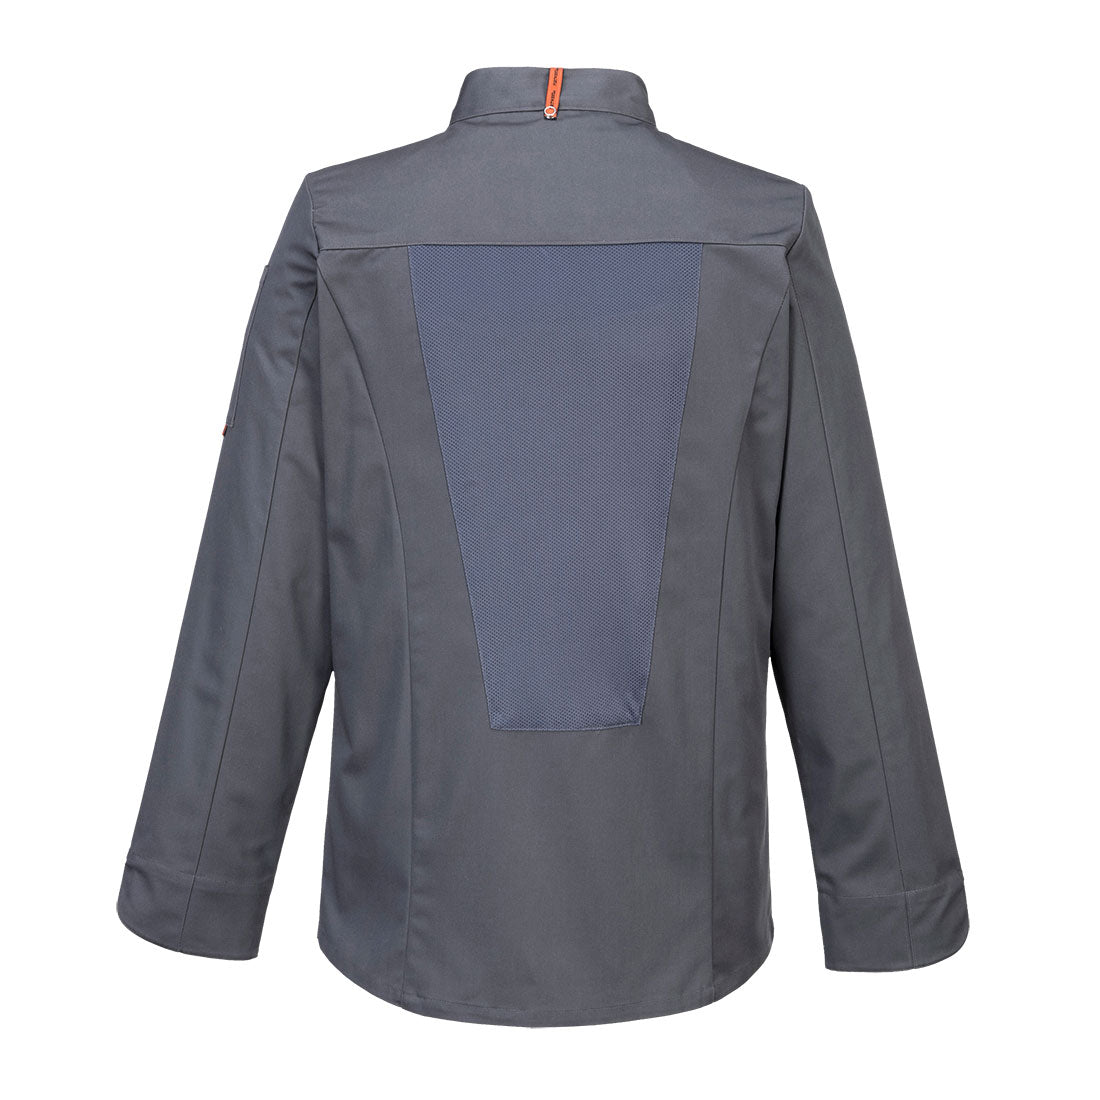 MeshAir Pro Jacket L/S Grey Back- C838